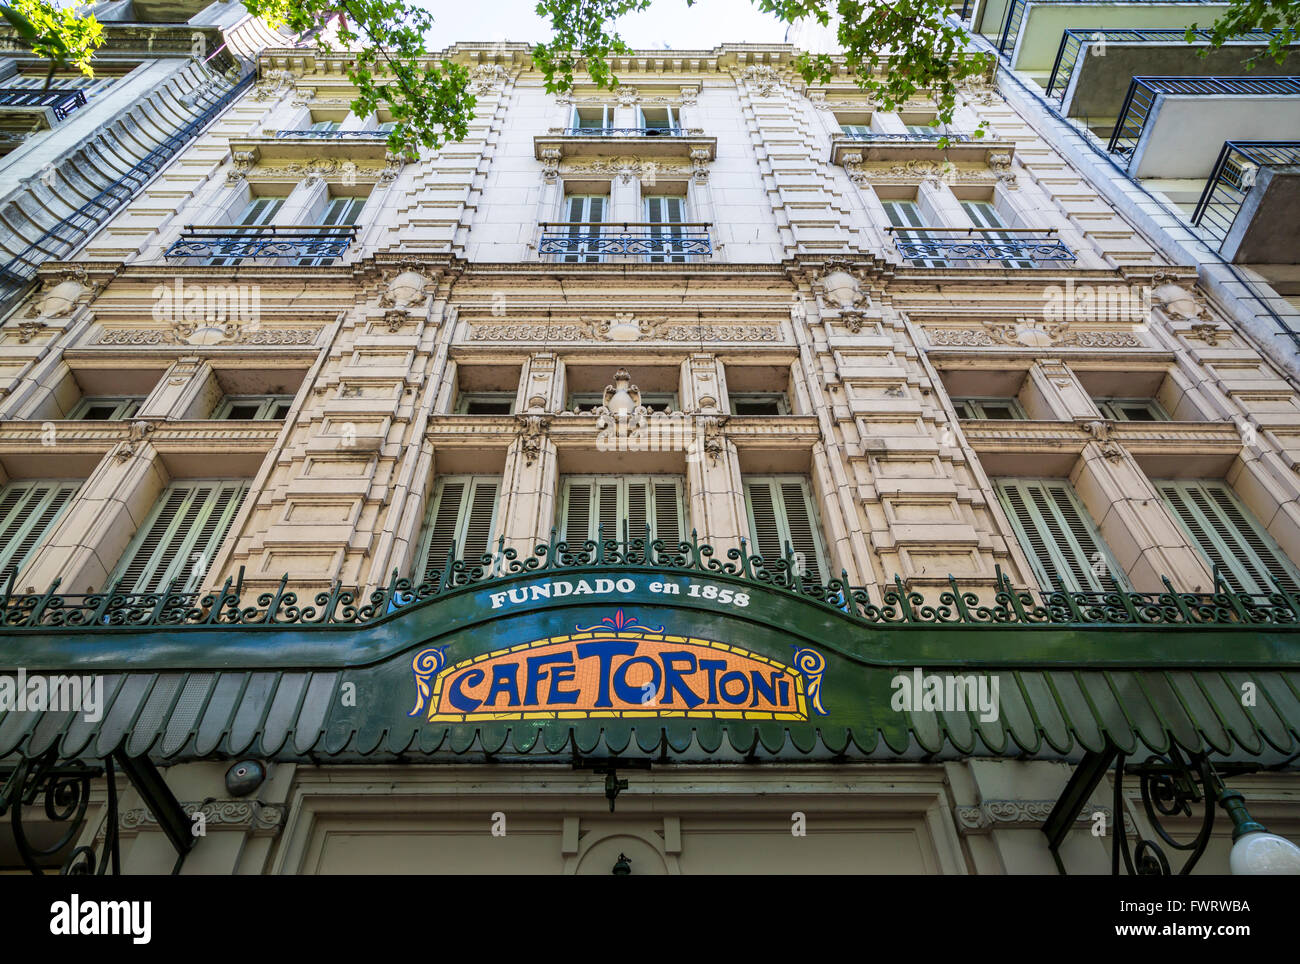 The Cafe Tortoni building exterior facade in Buenos Aires, South America. Stock Photo